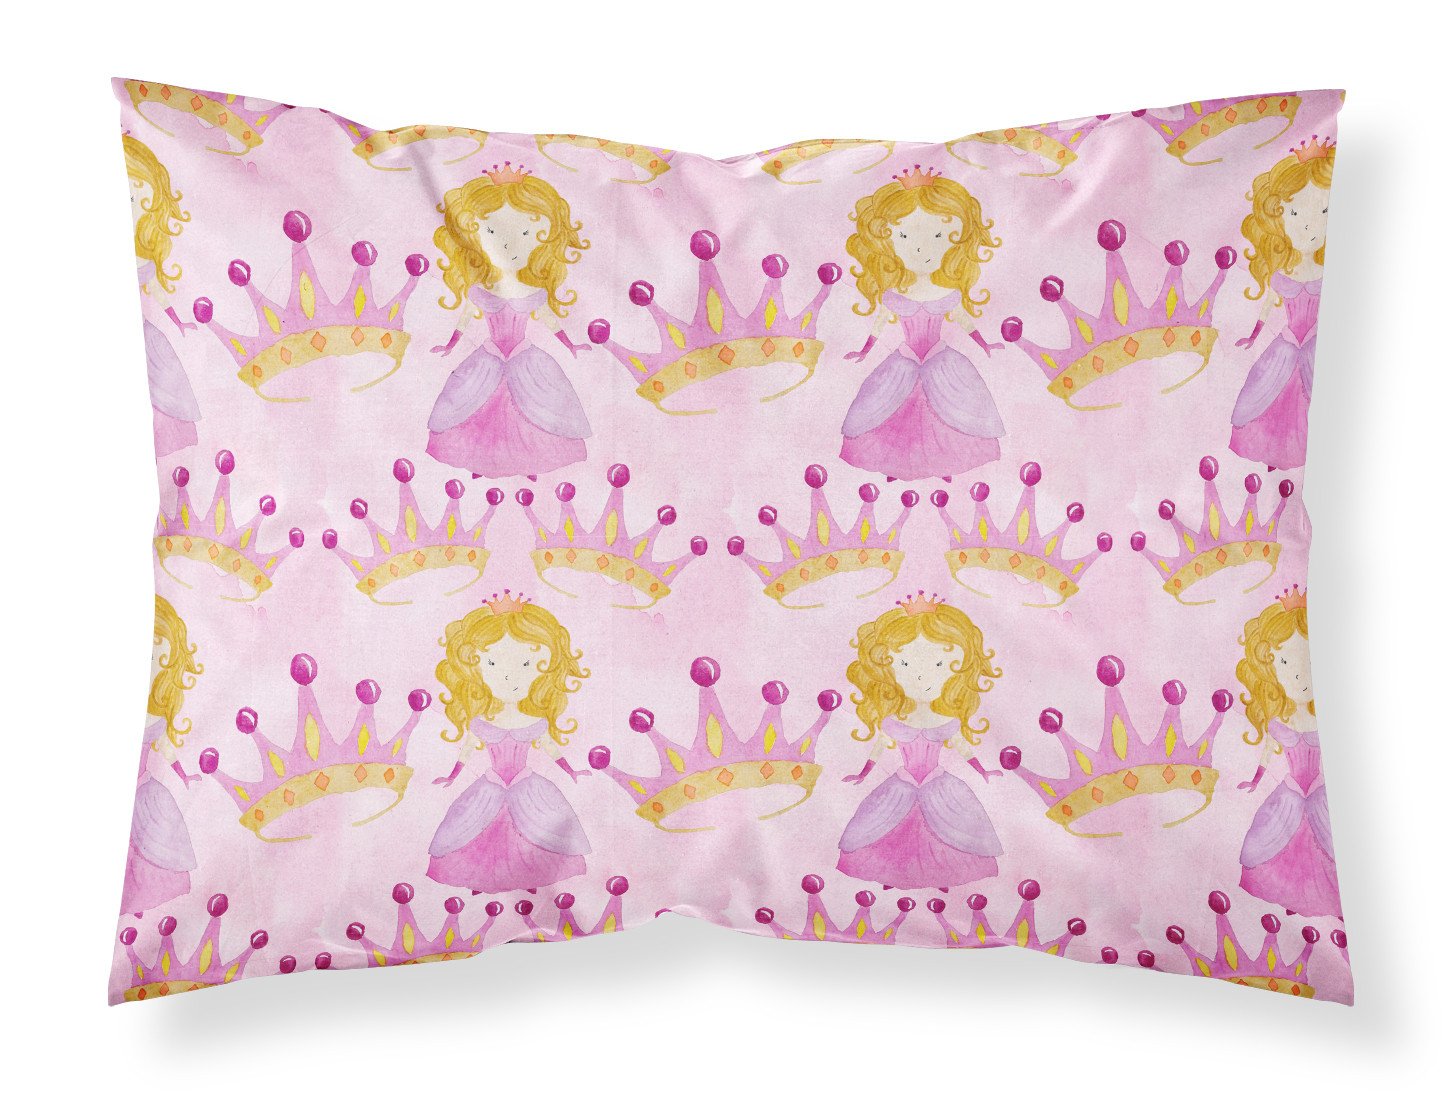 Watercolor Princess and Crown Fabric Standard Pillowcase BB7551PILLOWCASE by Caroline's Treasures